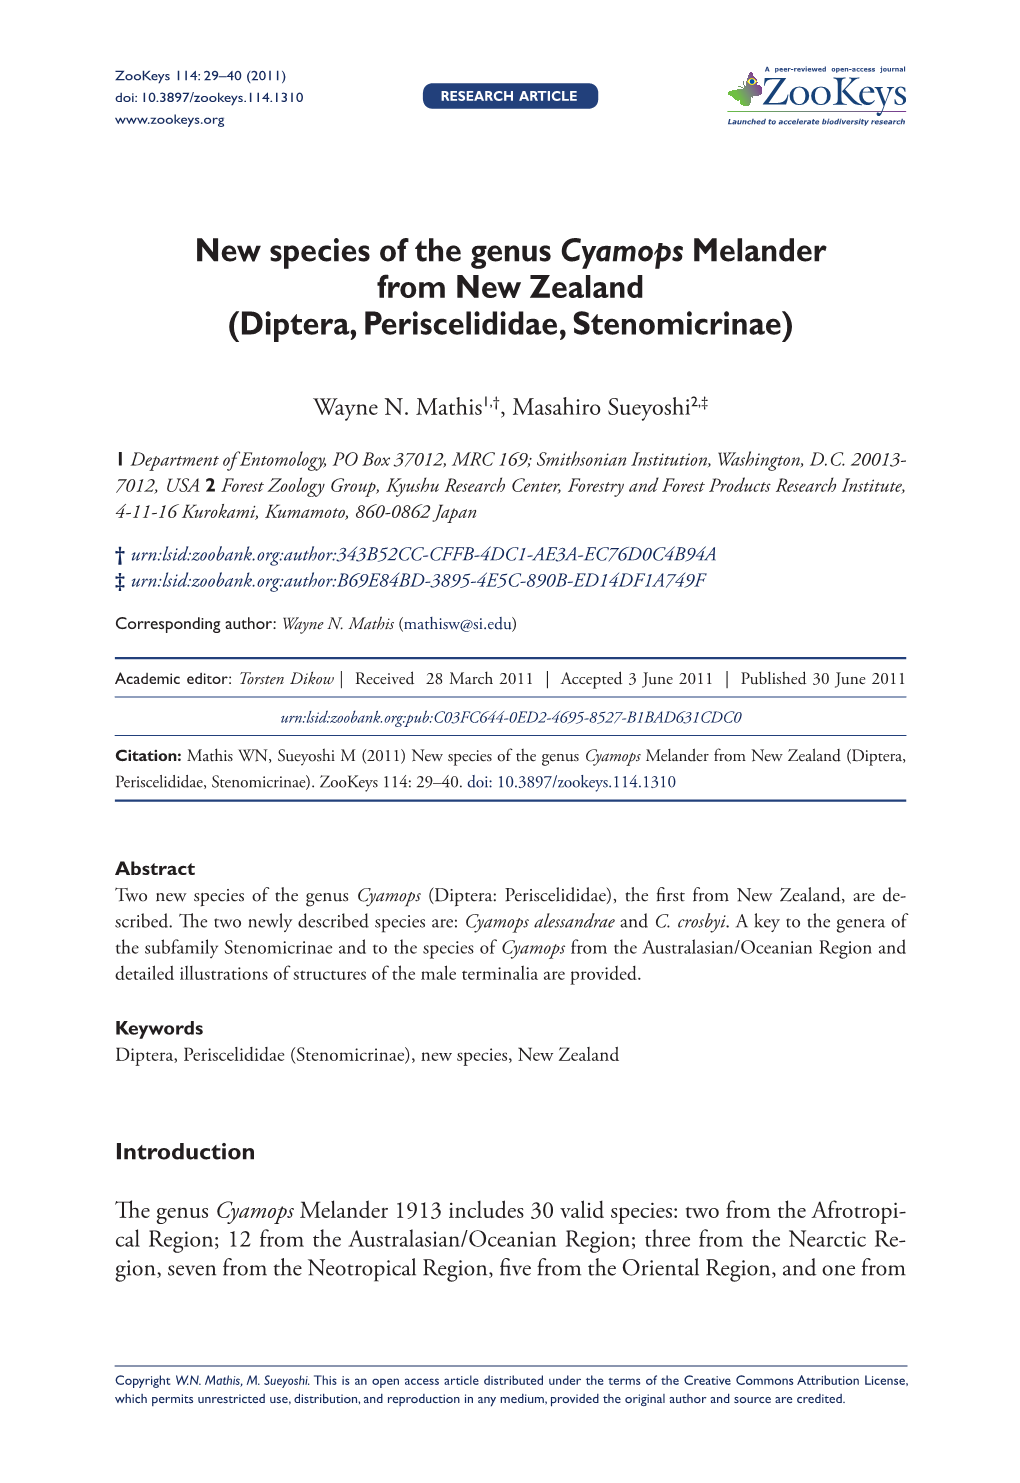 New Species of the Genus Cyamops Melander from New Zealand (Diptera, Periscelididae, Stenomicrinae)